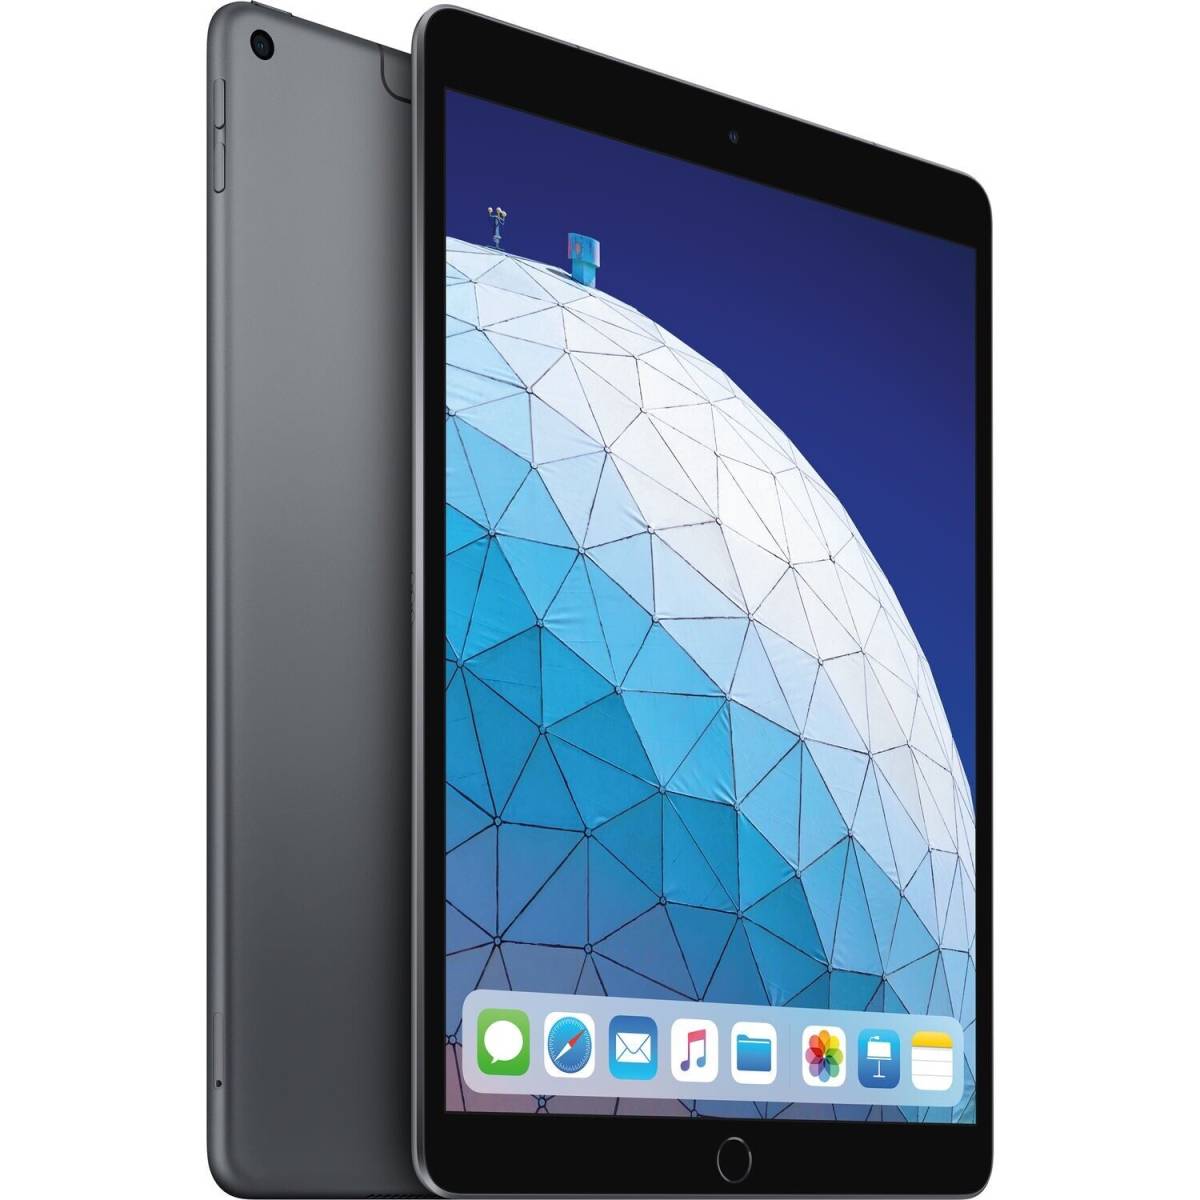 NEW Sealed Apple iPad Air 3rd Gen 64GB,Wi-Fi + 4G Cellular, 10.5